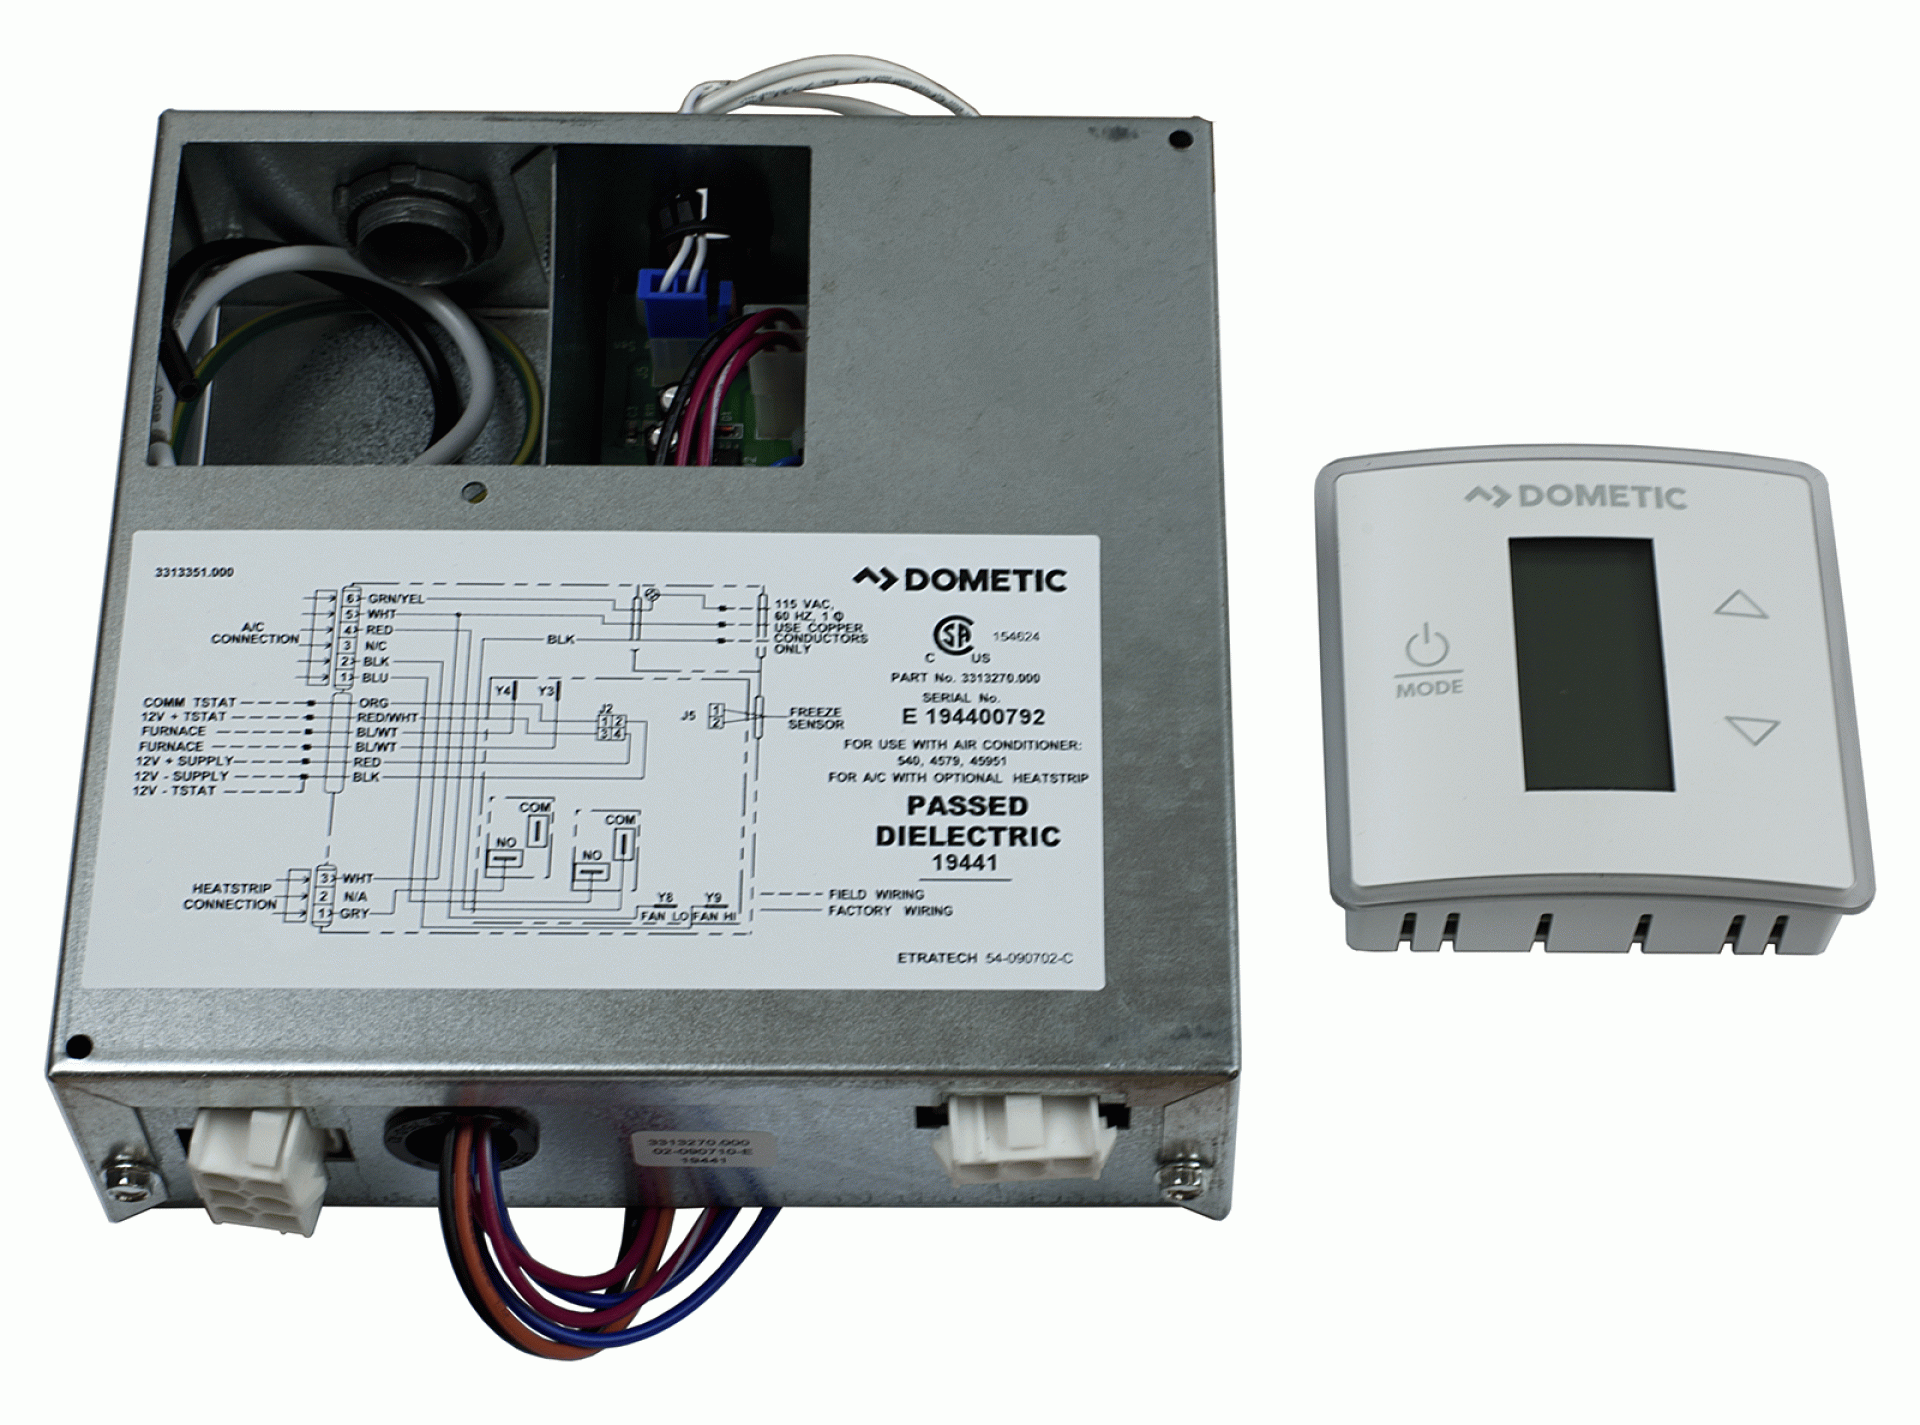 DOMETIC | 3316232.700 | Single zone wall thermostat w/ control kit - Polar White